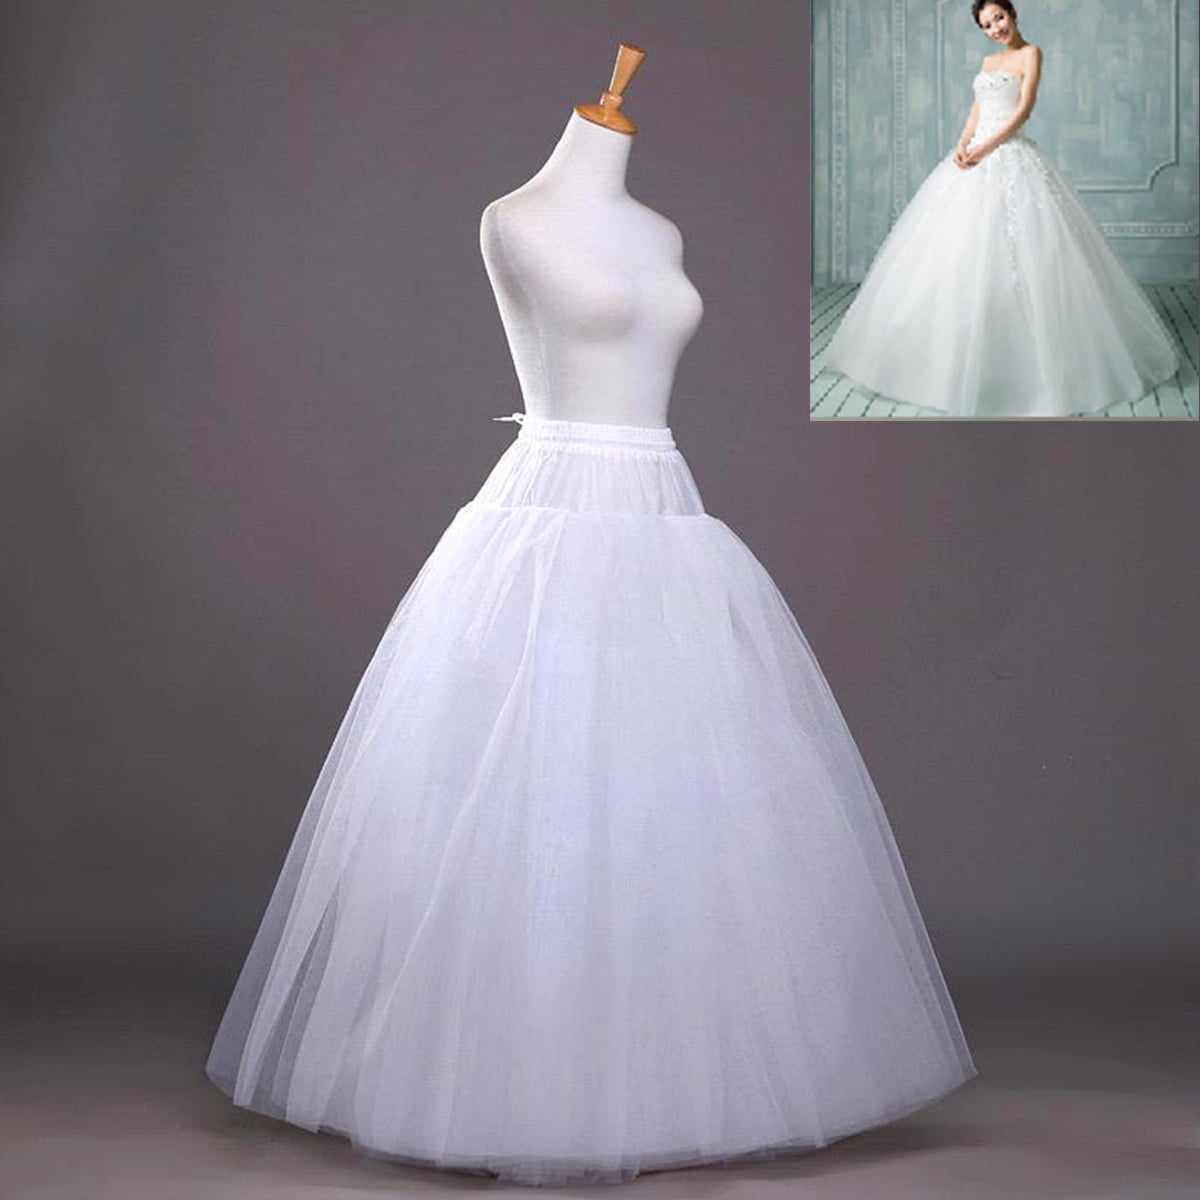 Petticoat for Wedding Dress